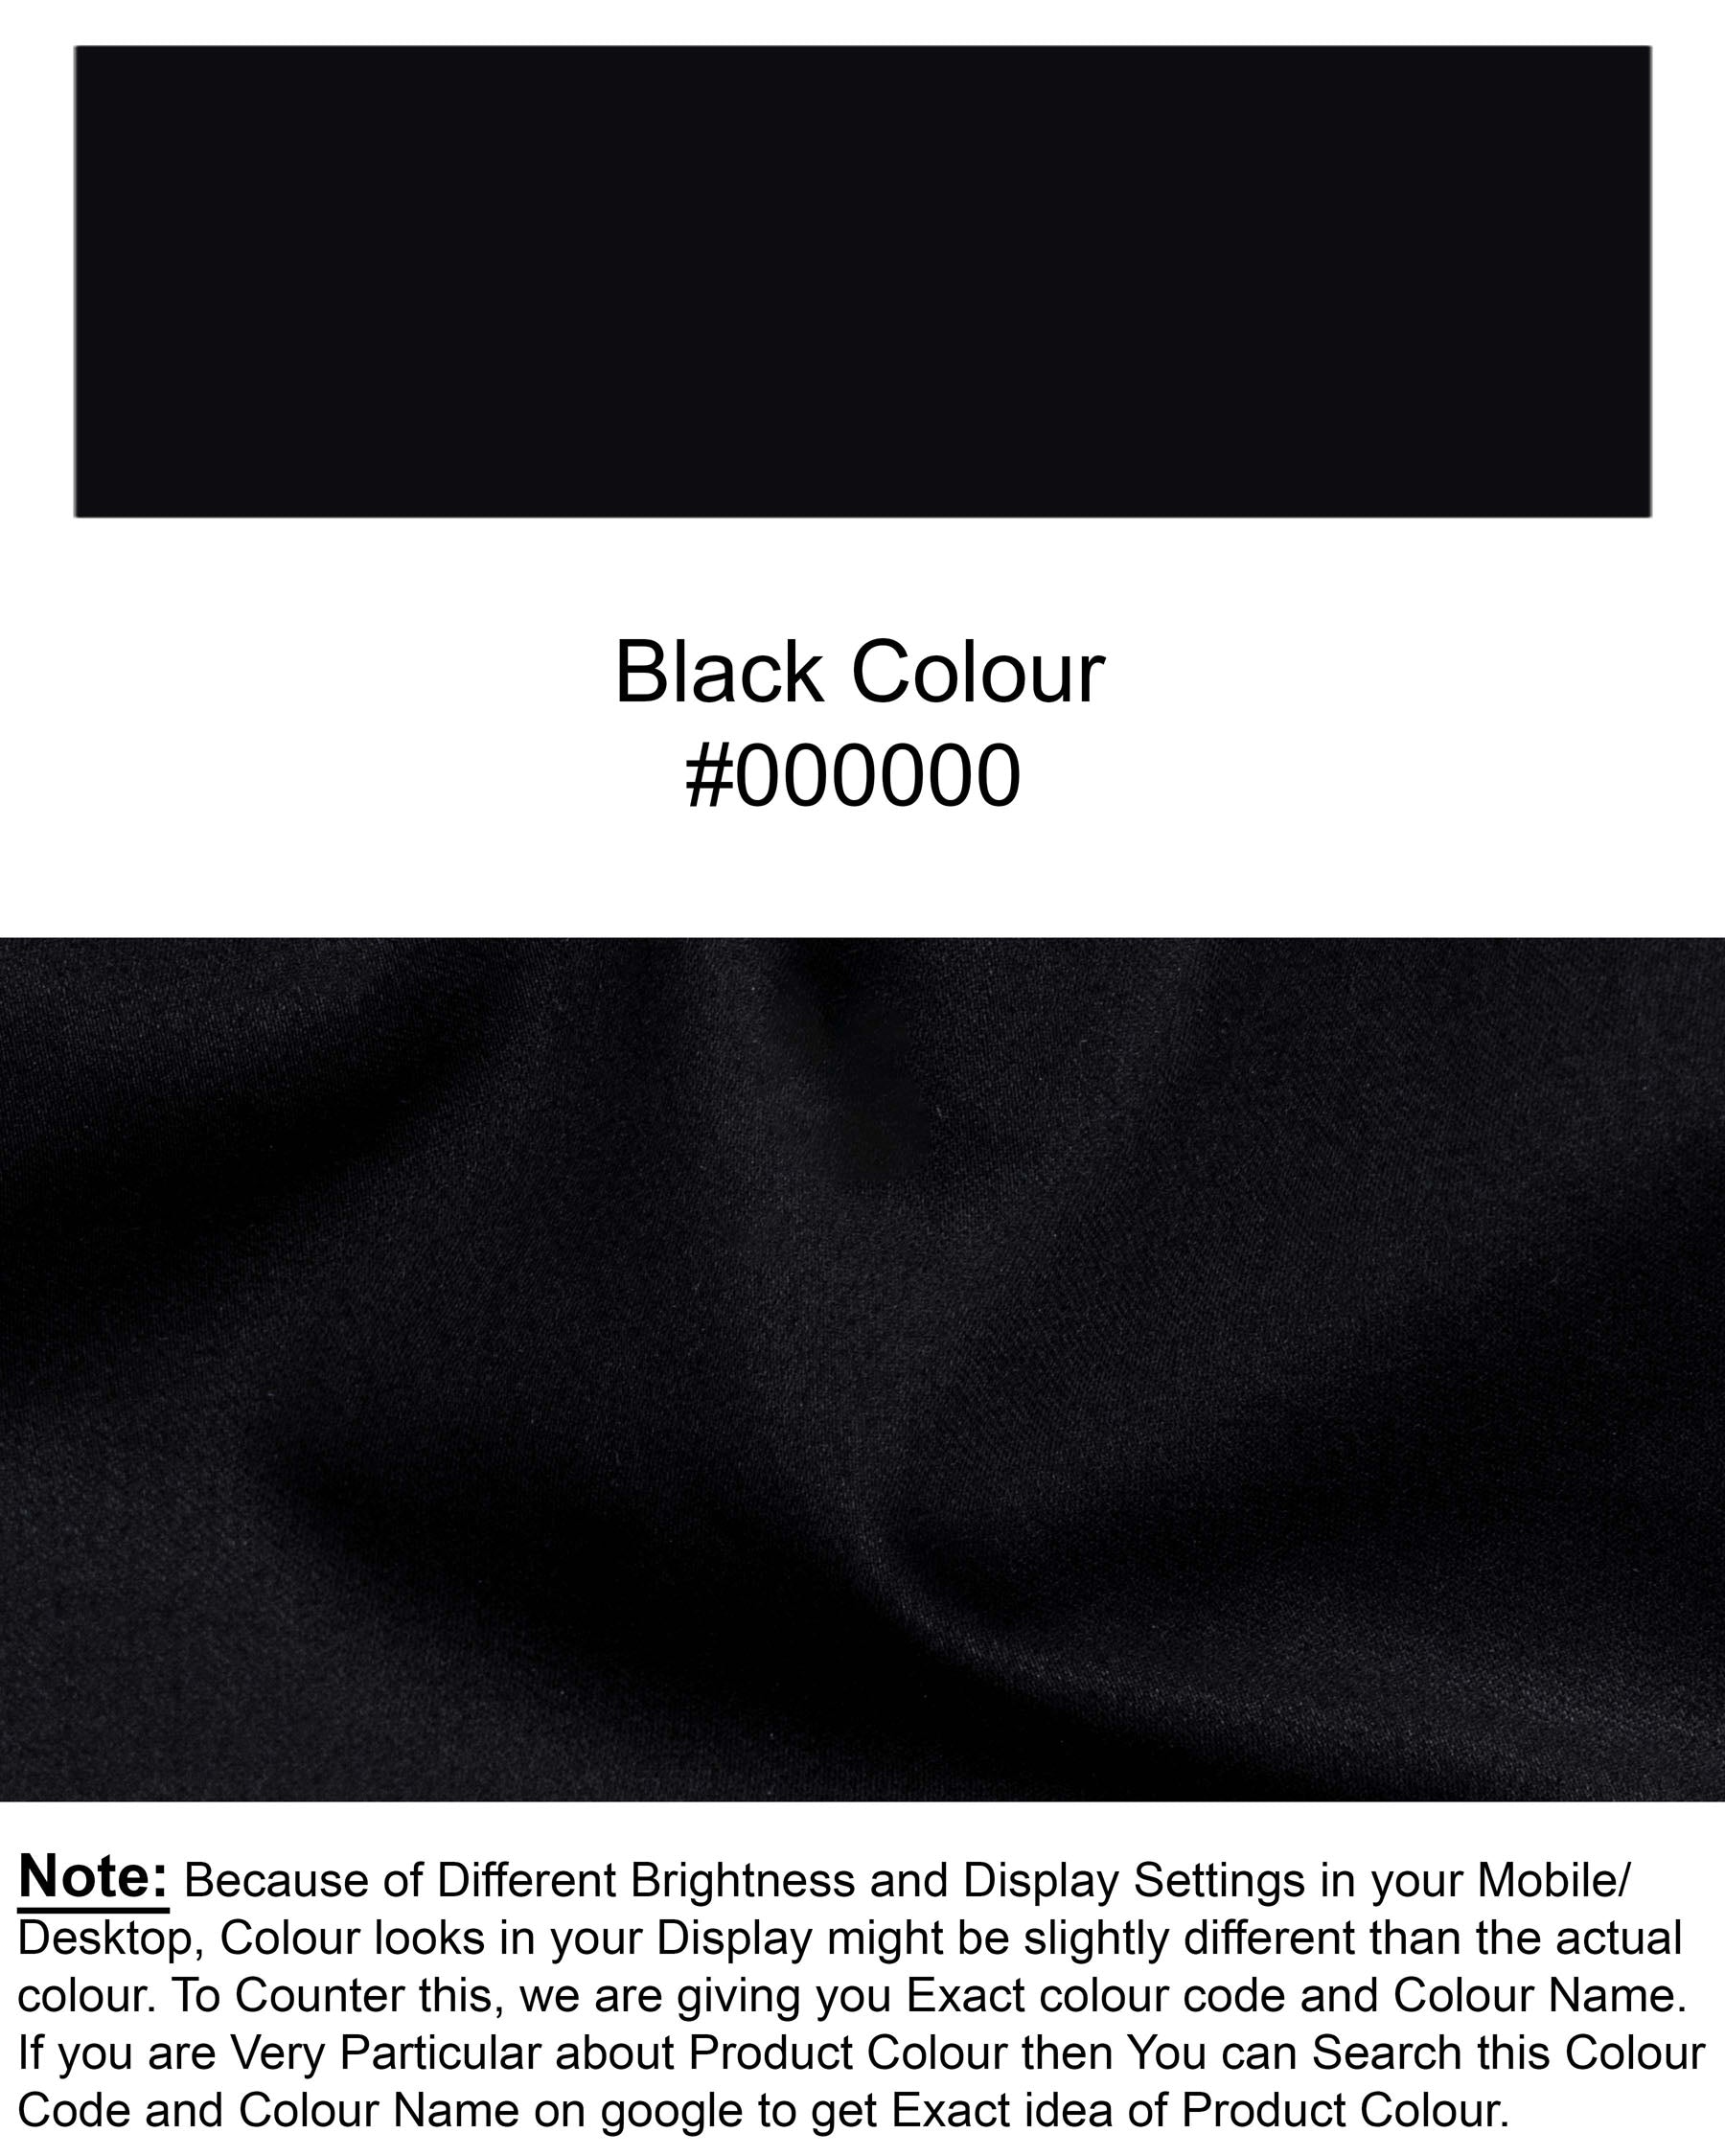 Jade Black with White Striped Super Soft Premium Cotton Designer Shirt 6825-BLK-P307-SS-38, 6825-BLK-P307-SS-H-38, 6825-BLK-P307-SS-39, 6825-BLK-P307-SS-H-39, 6825-BLK-P307-SS-40, 6825-BLK-P307-SS-H-40, 6825-BLK-P307-SS-42, 6825-BLK-P307-SS-H-42, 6825-BLK-P307-SS-44, 6825-BLK-P307-SS-H-44, 6825-BLK-P307-SS-46, 6825-BLK-P307-SS-H-46, 6825-BLK-P307-SS-48, 6825-BLK-P307-SS-H-48, 6825-BLK-P307-SS-50, 6825-BLK-P307-SS-H-50, 6825-BLK-P307-SS-52, 6825-BLK-P307-SS-H-52